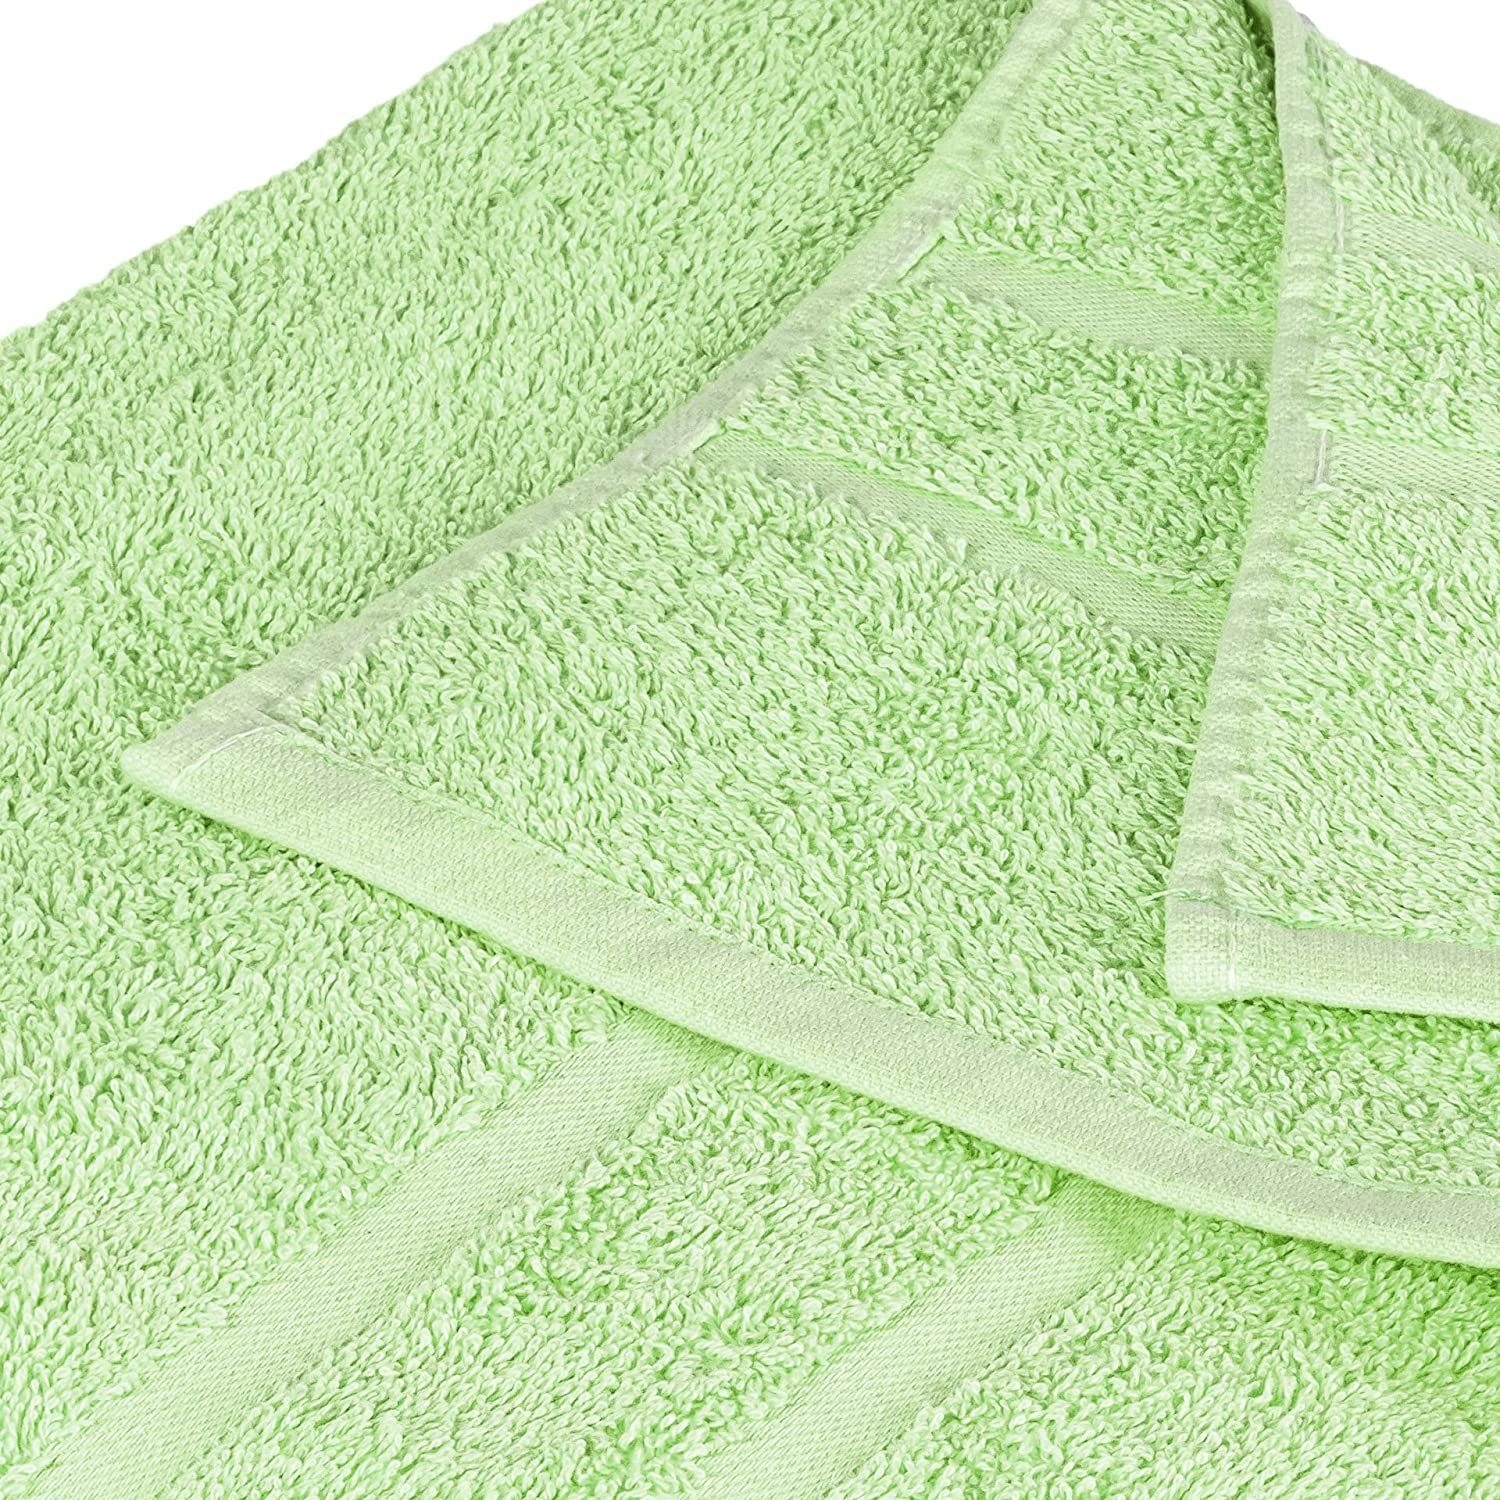 StickandShine Handtuch Handtücher Badetücher Saunatücher in zur Duschtücher 100% Wahl Hellgrün Baumwolle 500 GSM Gästehandtücher